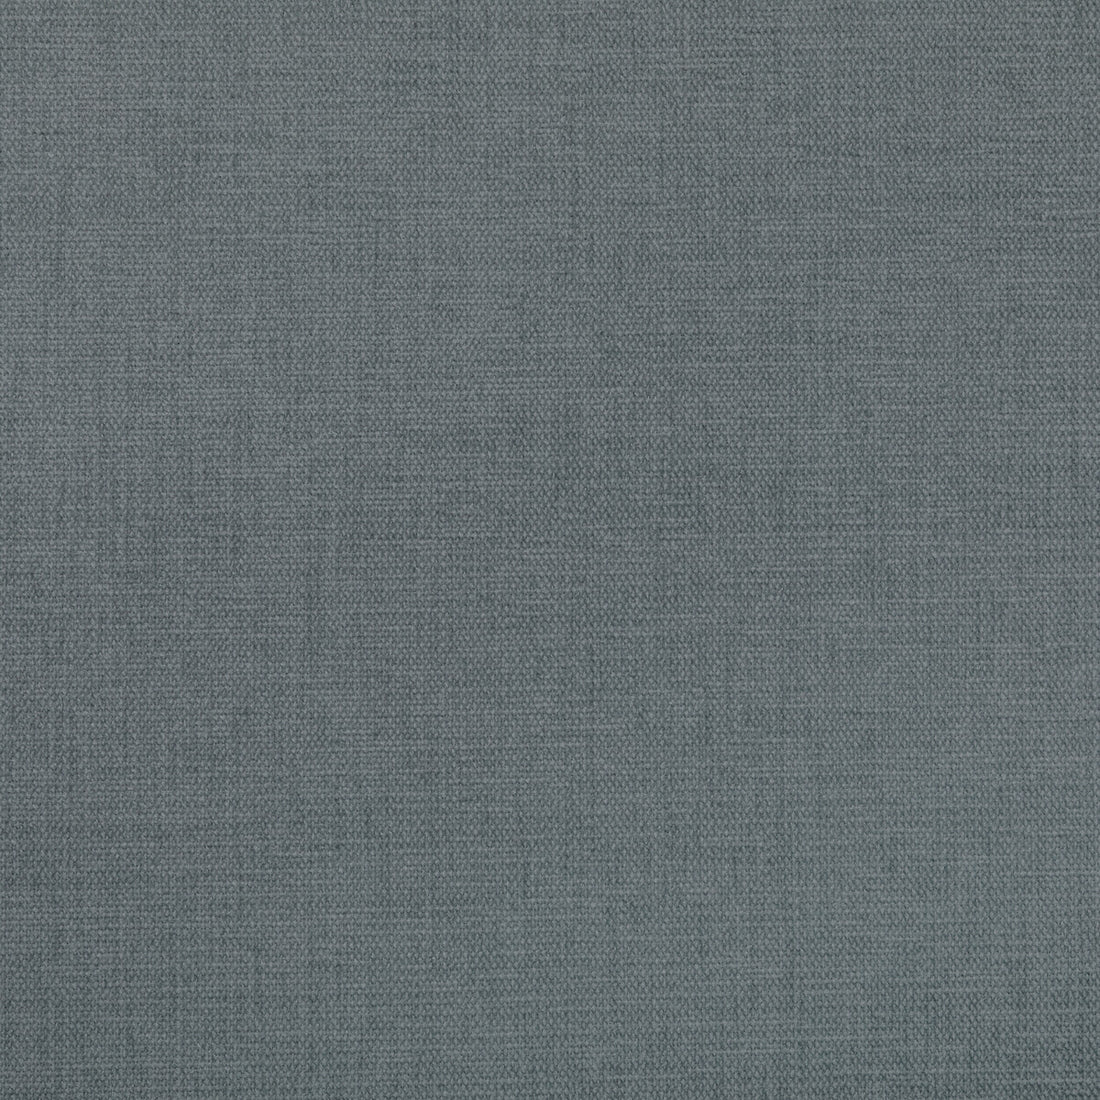 Kravet Smart fabric in 34959-505 color - pattern 34959.505.0 - by Kravet Smart in the Performance Kravetarmor collection